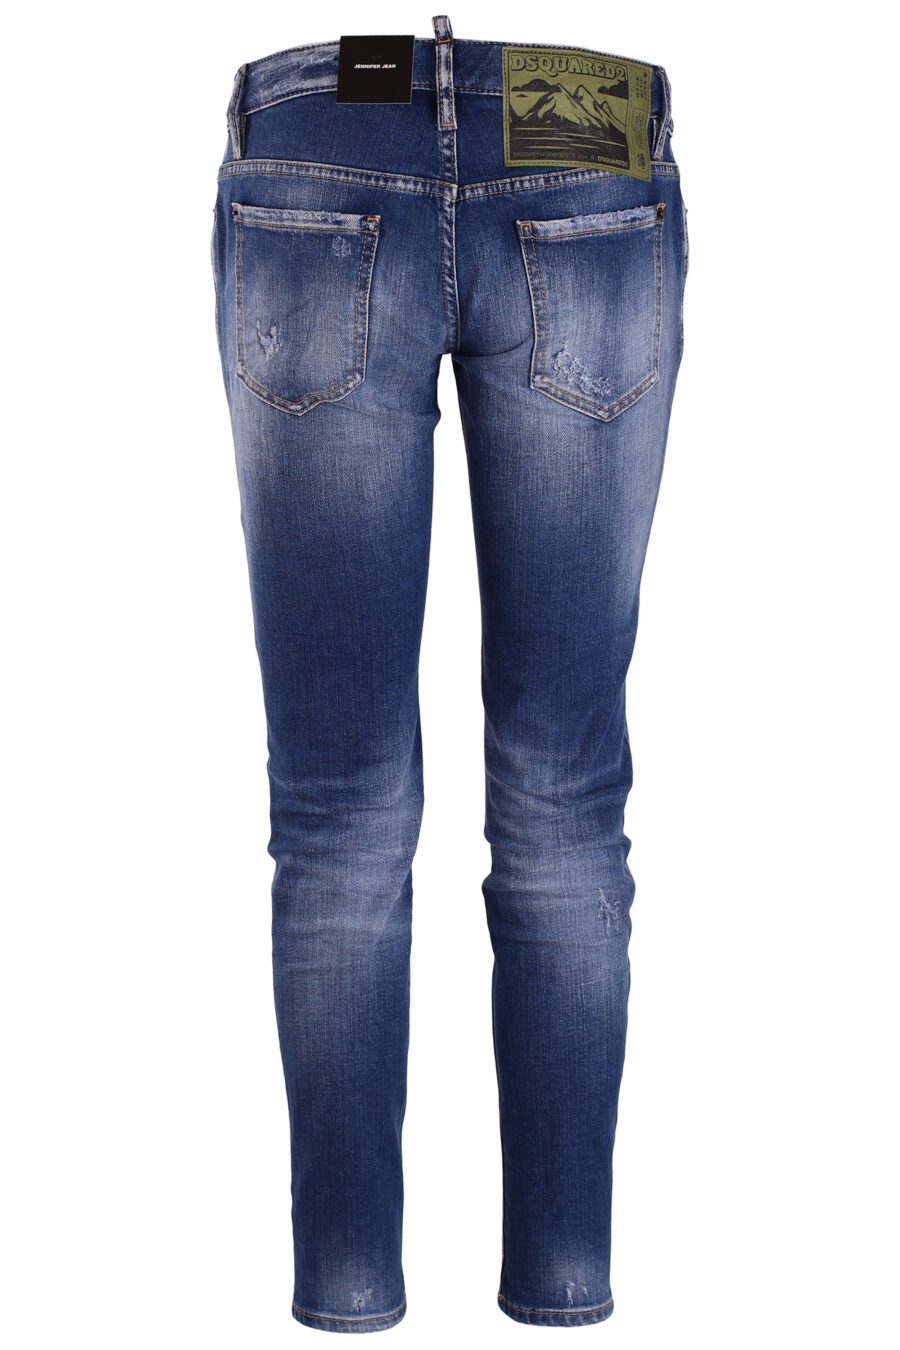 Jeans "jennifer jean" blue worn - IMG 3768